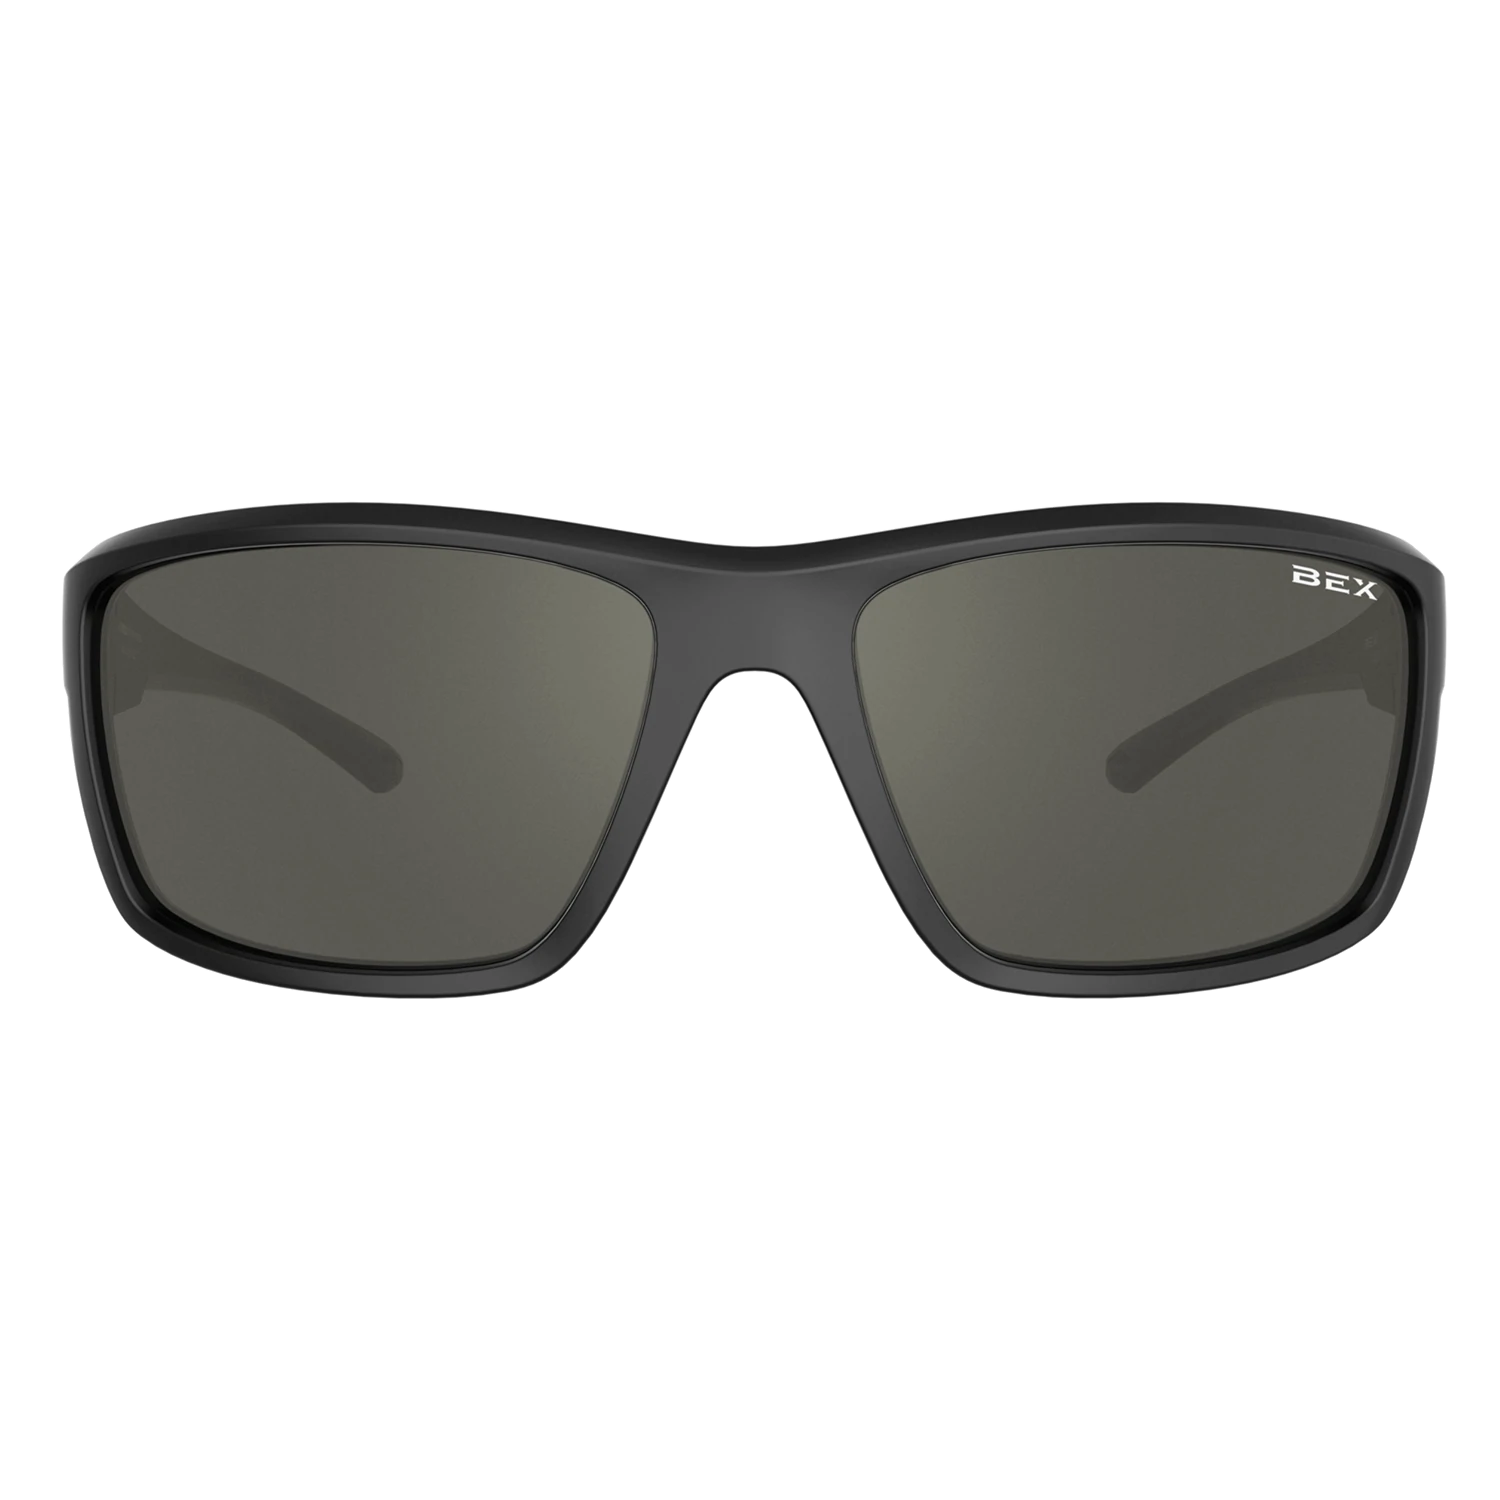 Full Black Frame Sunglasses With Black Shades Copy